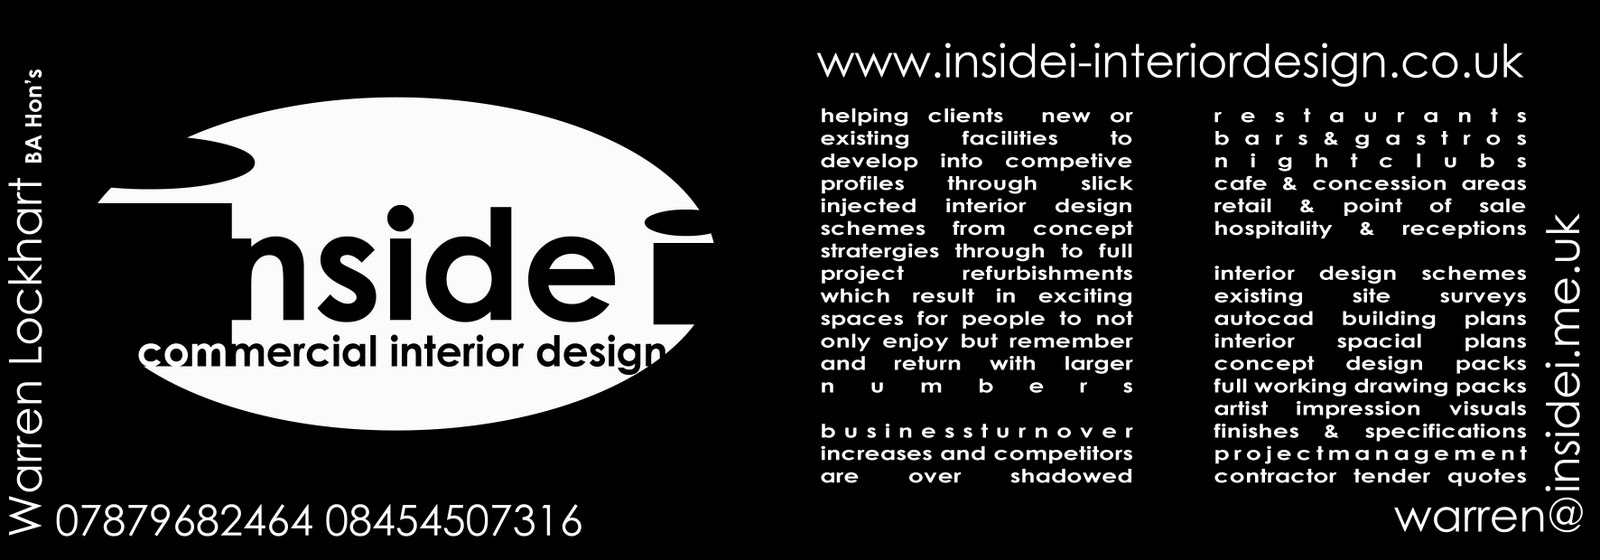 inside i interior design launches new website